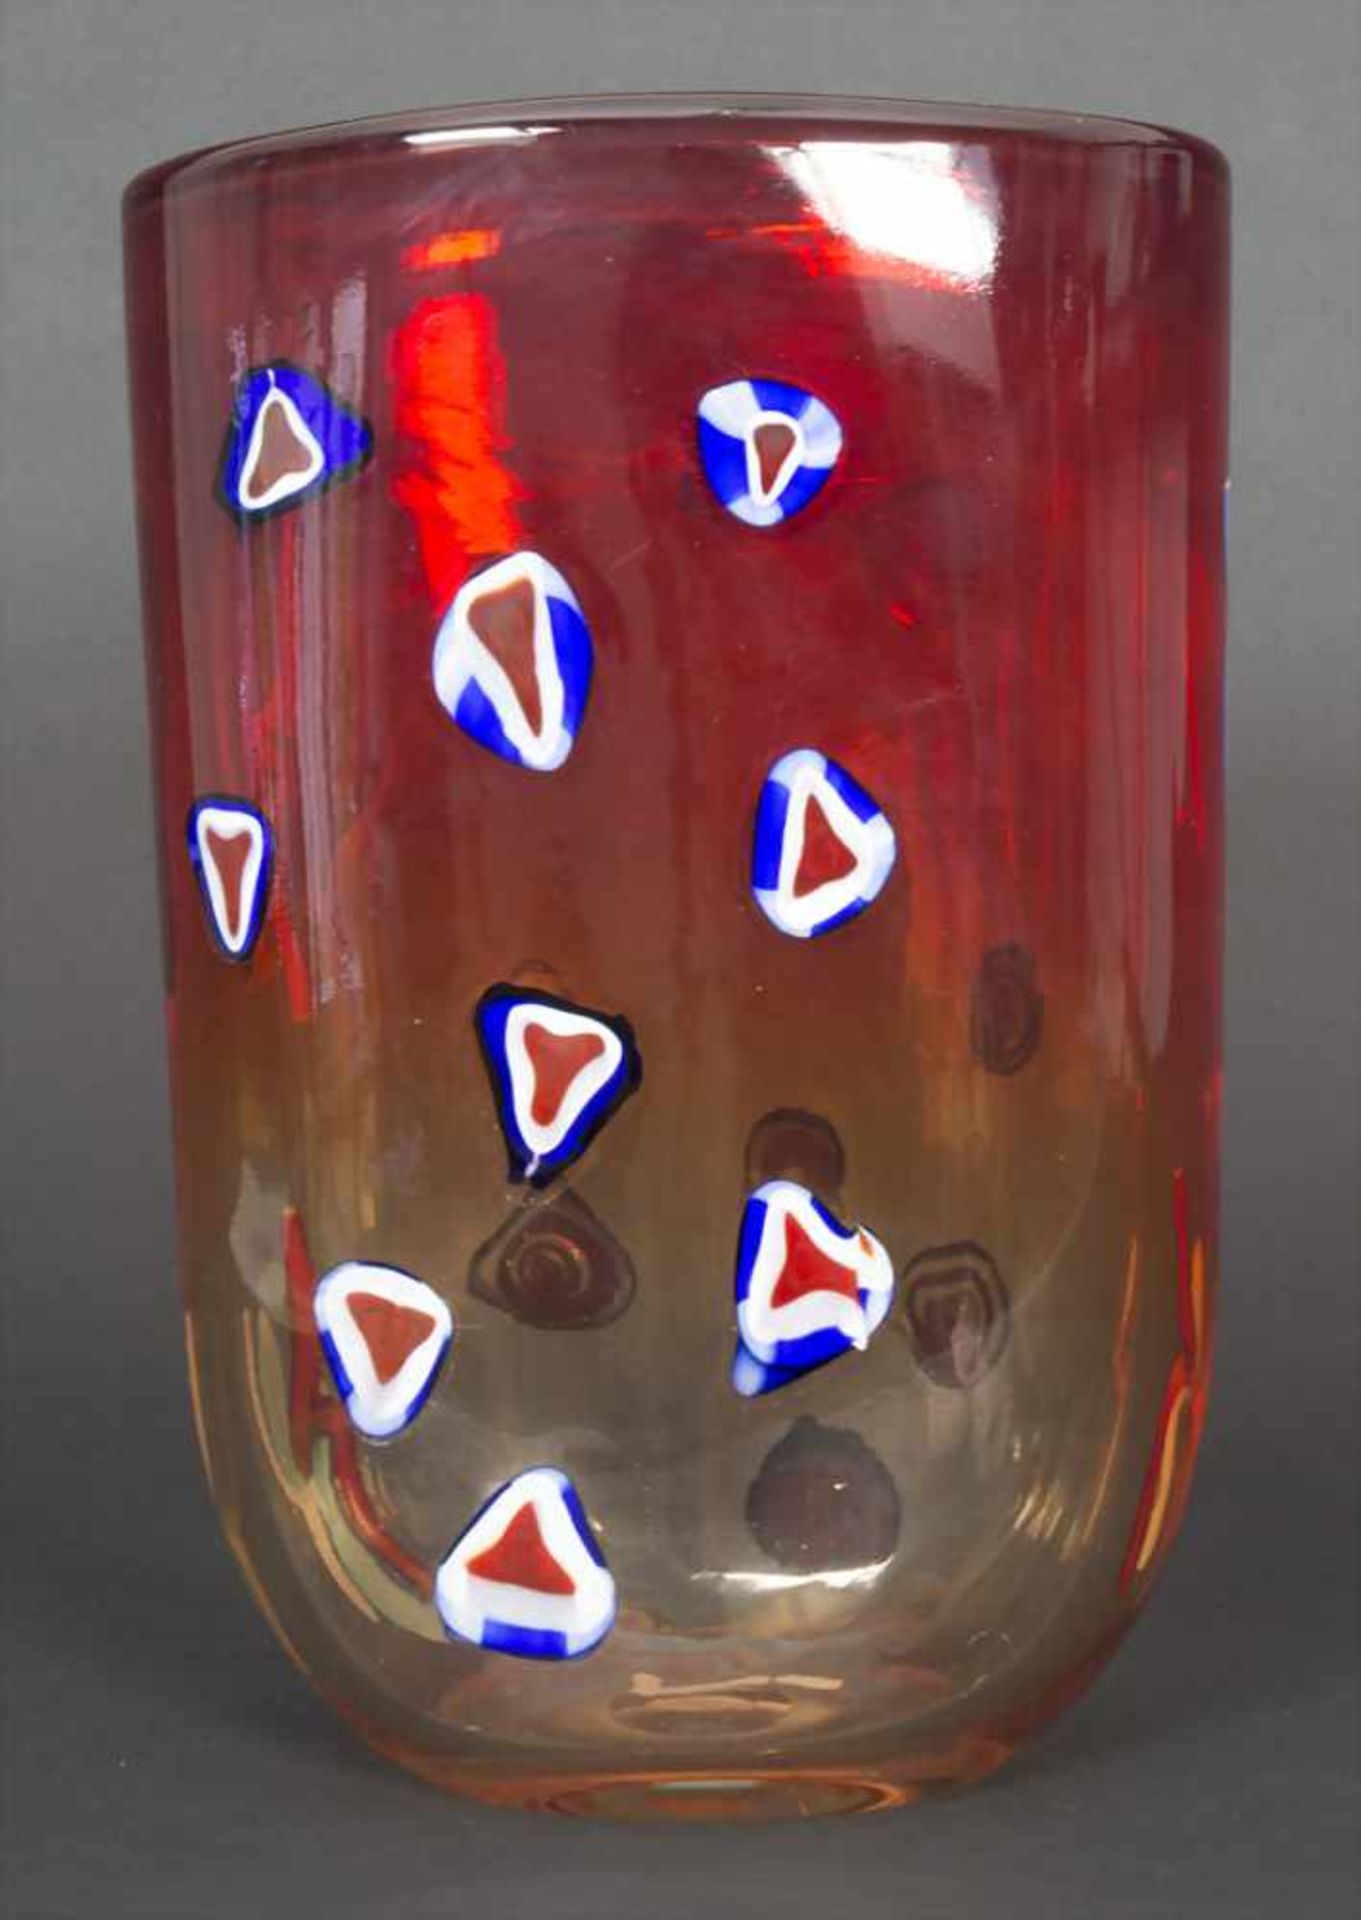 Ziervase / A decorative vase, Murano, wohl Vetreria Vistosi, 60/70er JahreMaterial/Technik: